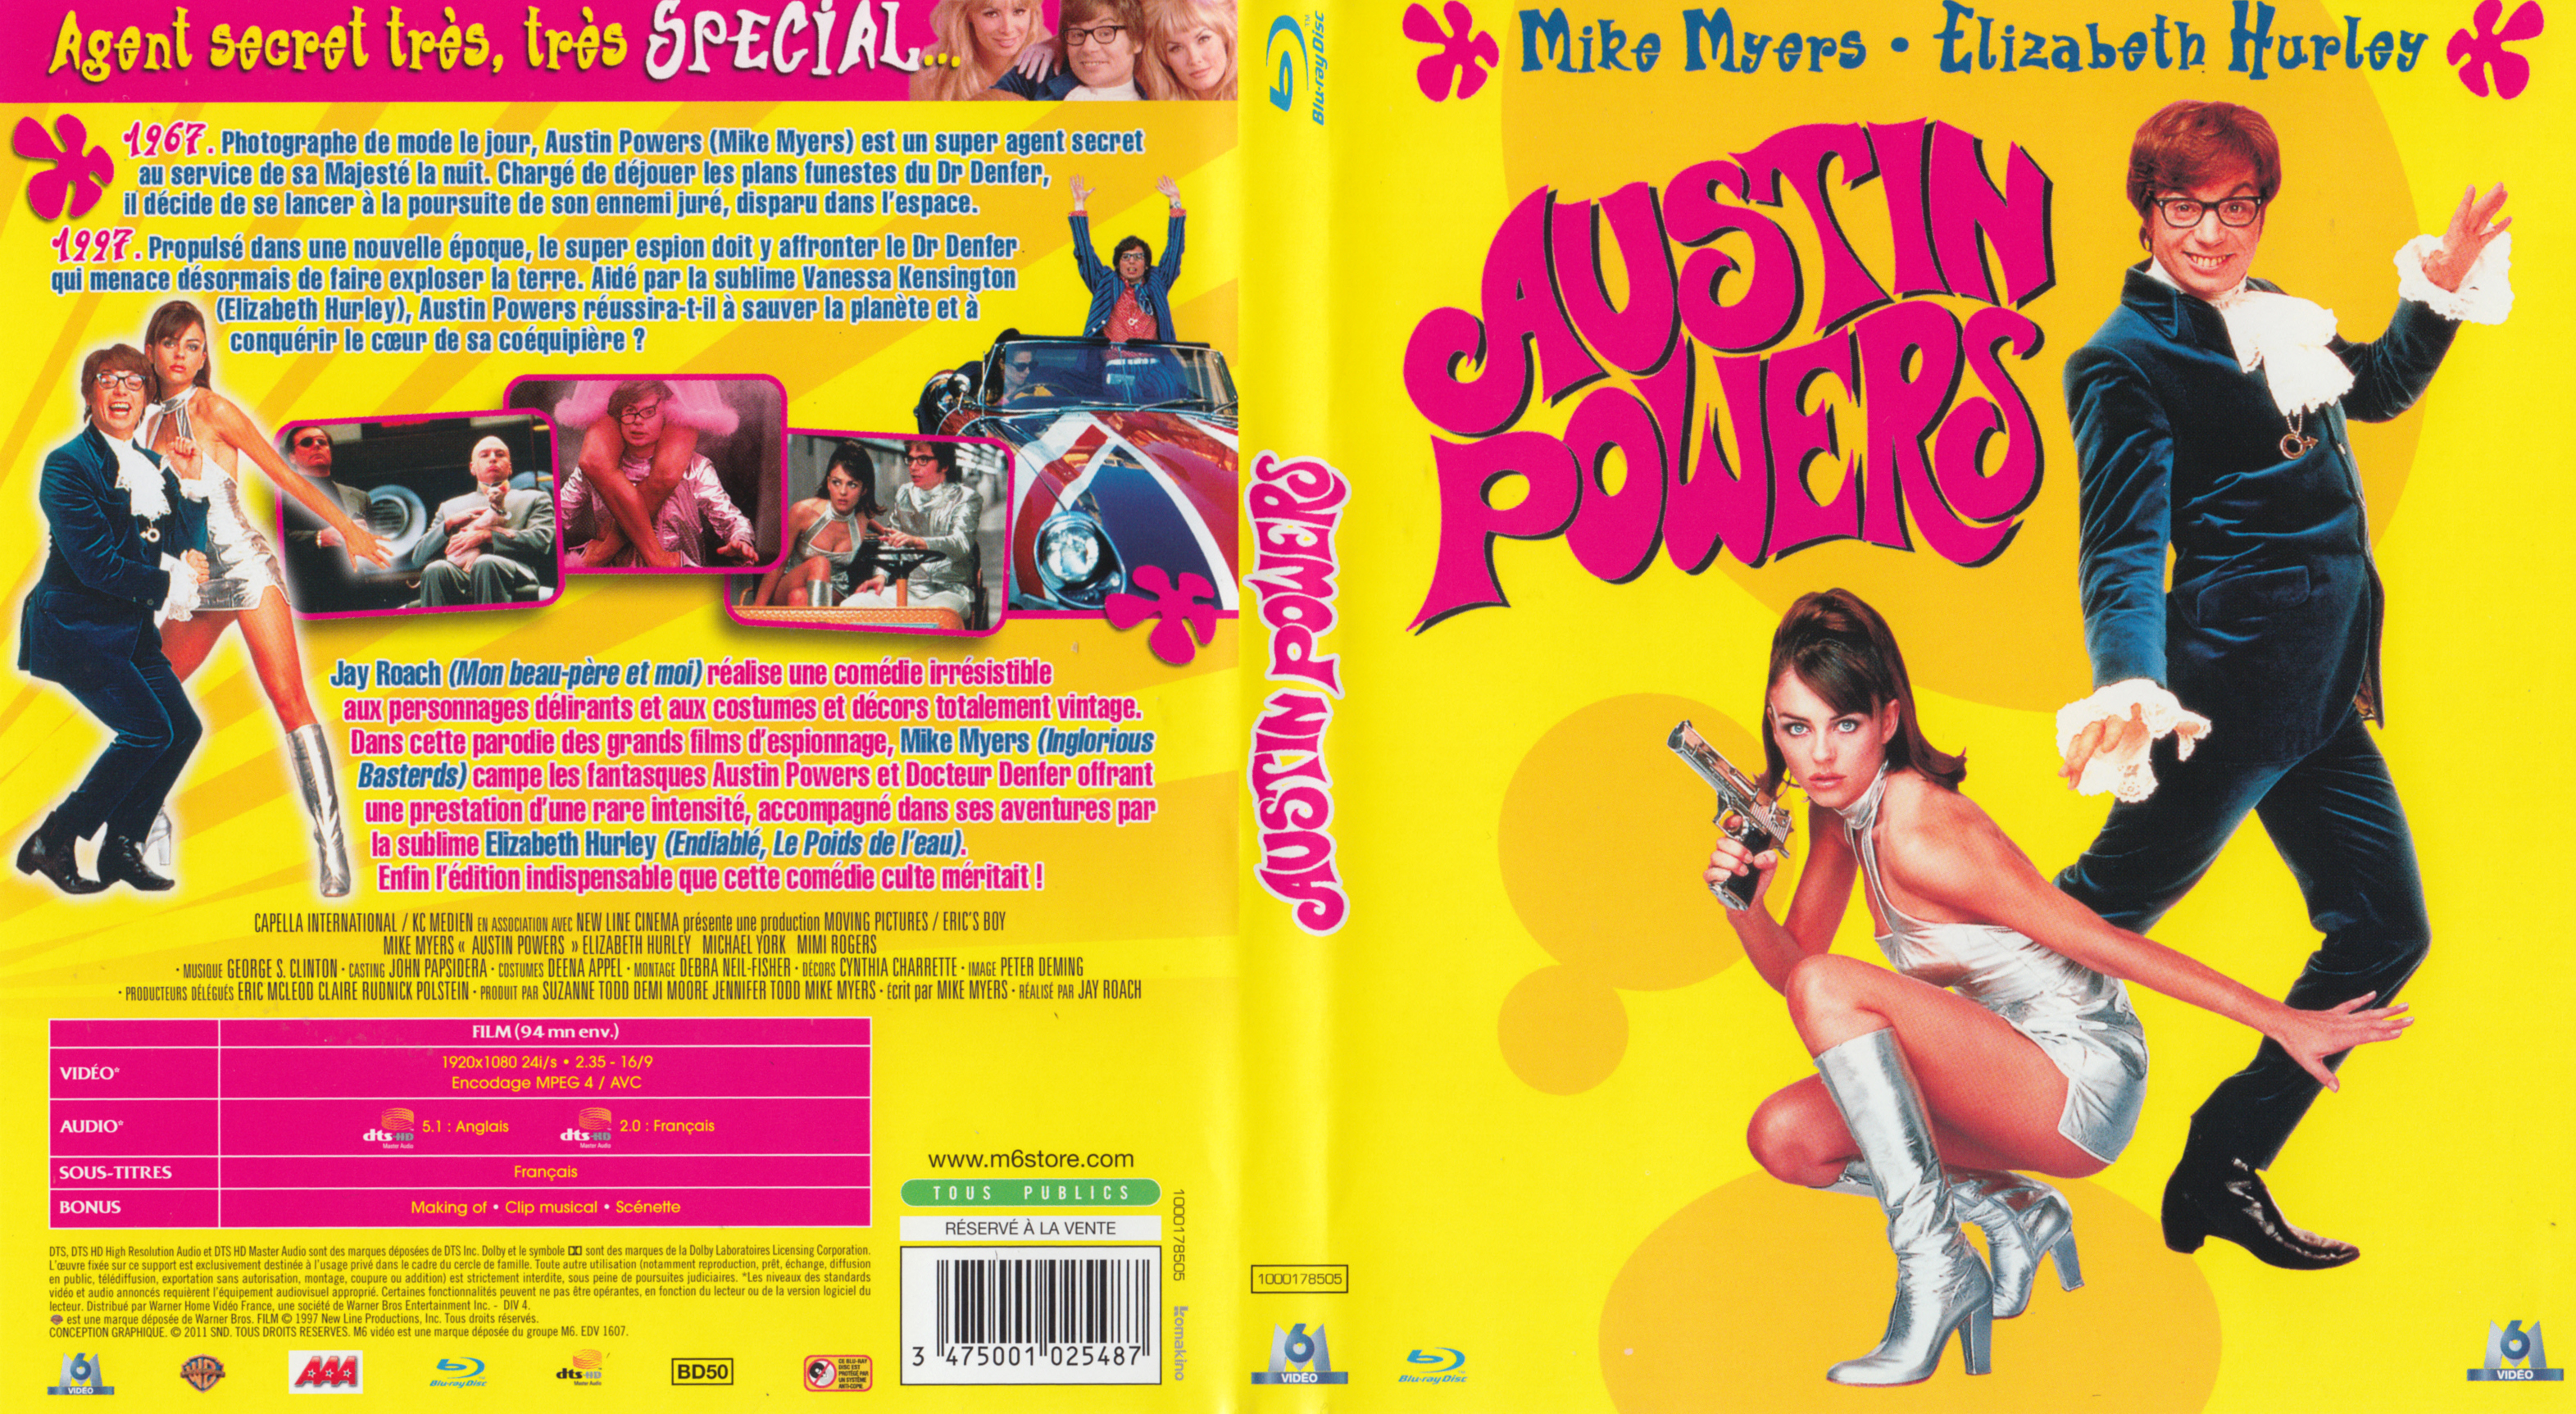 Jaquette DVD Austin Powers (BLU-RAY)